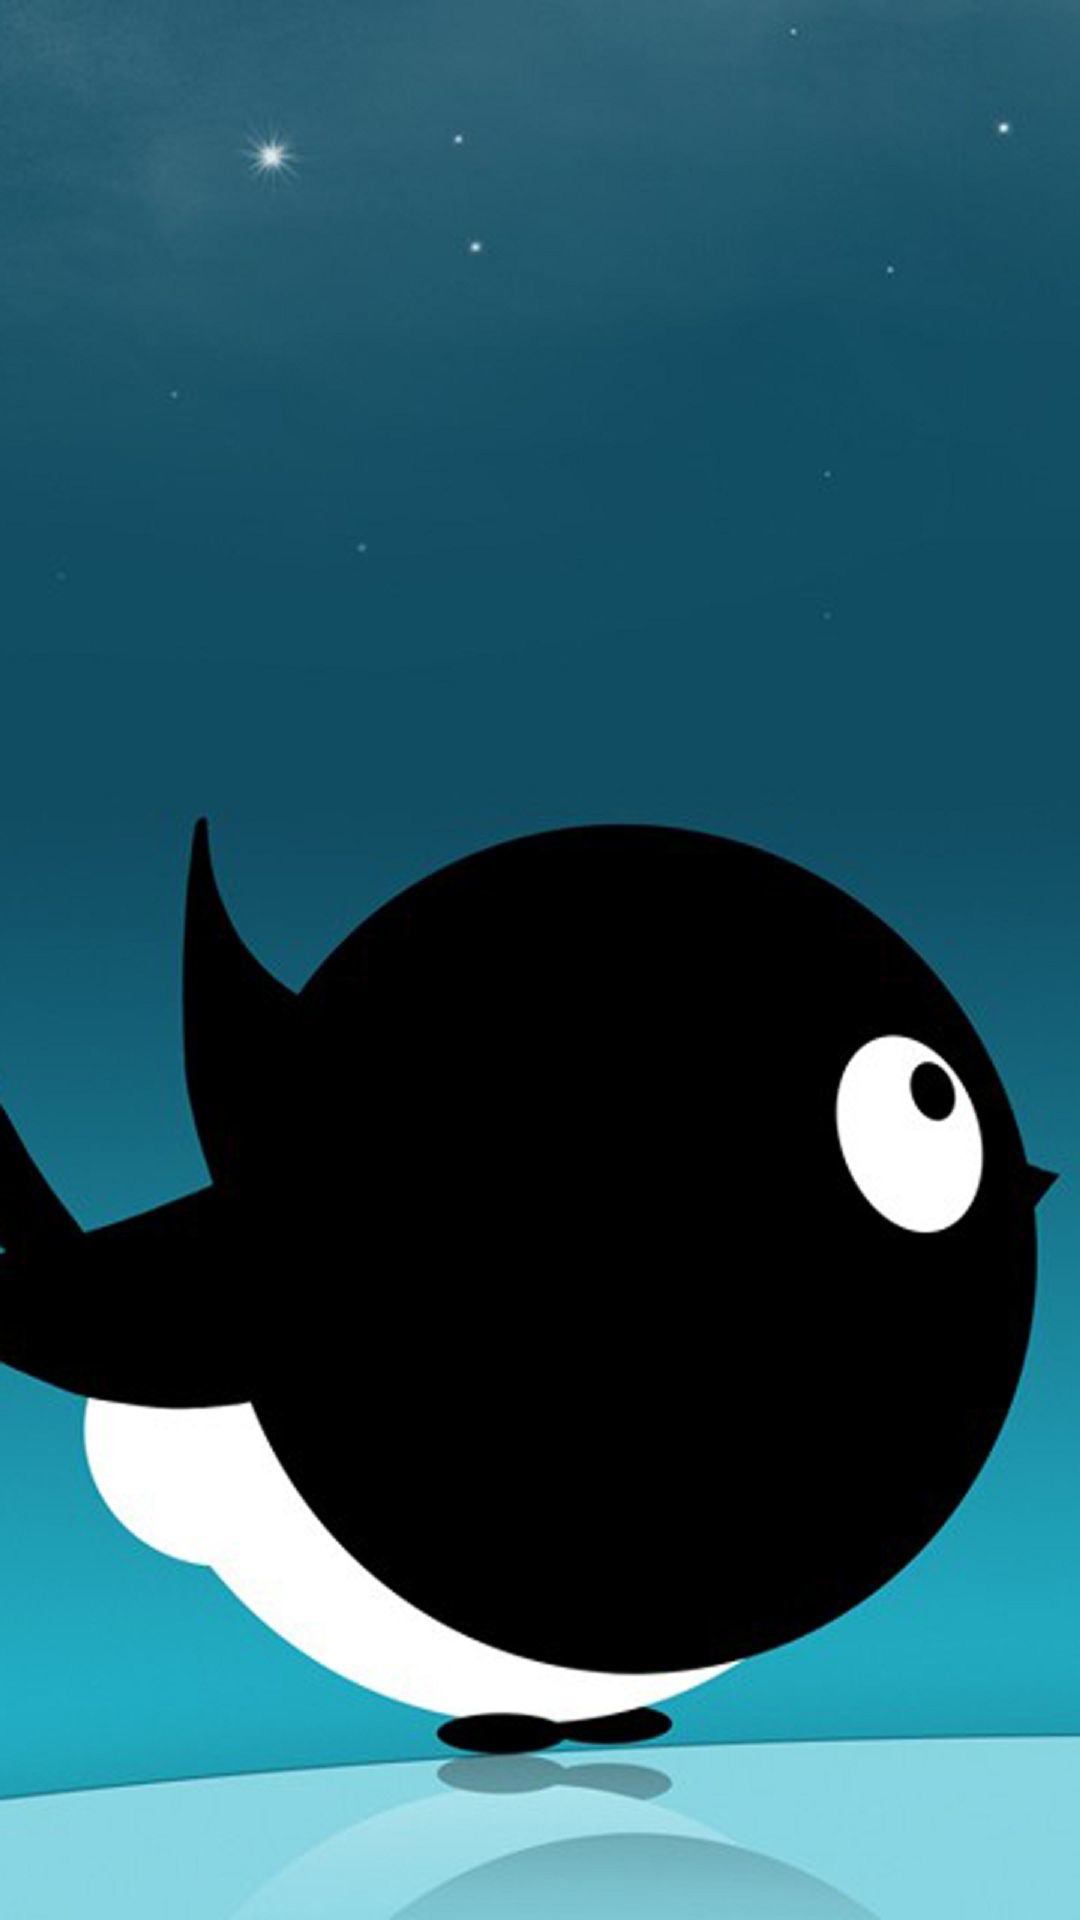 1080x1920 Cute Black Bird Cartoon Android Wallpaper free download